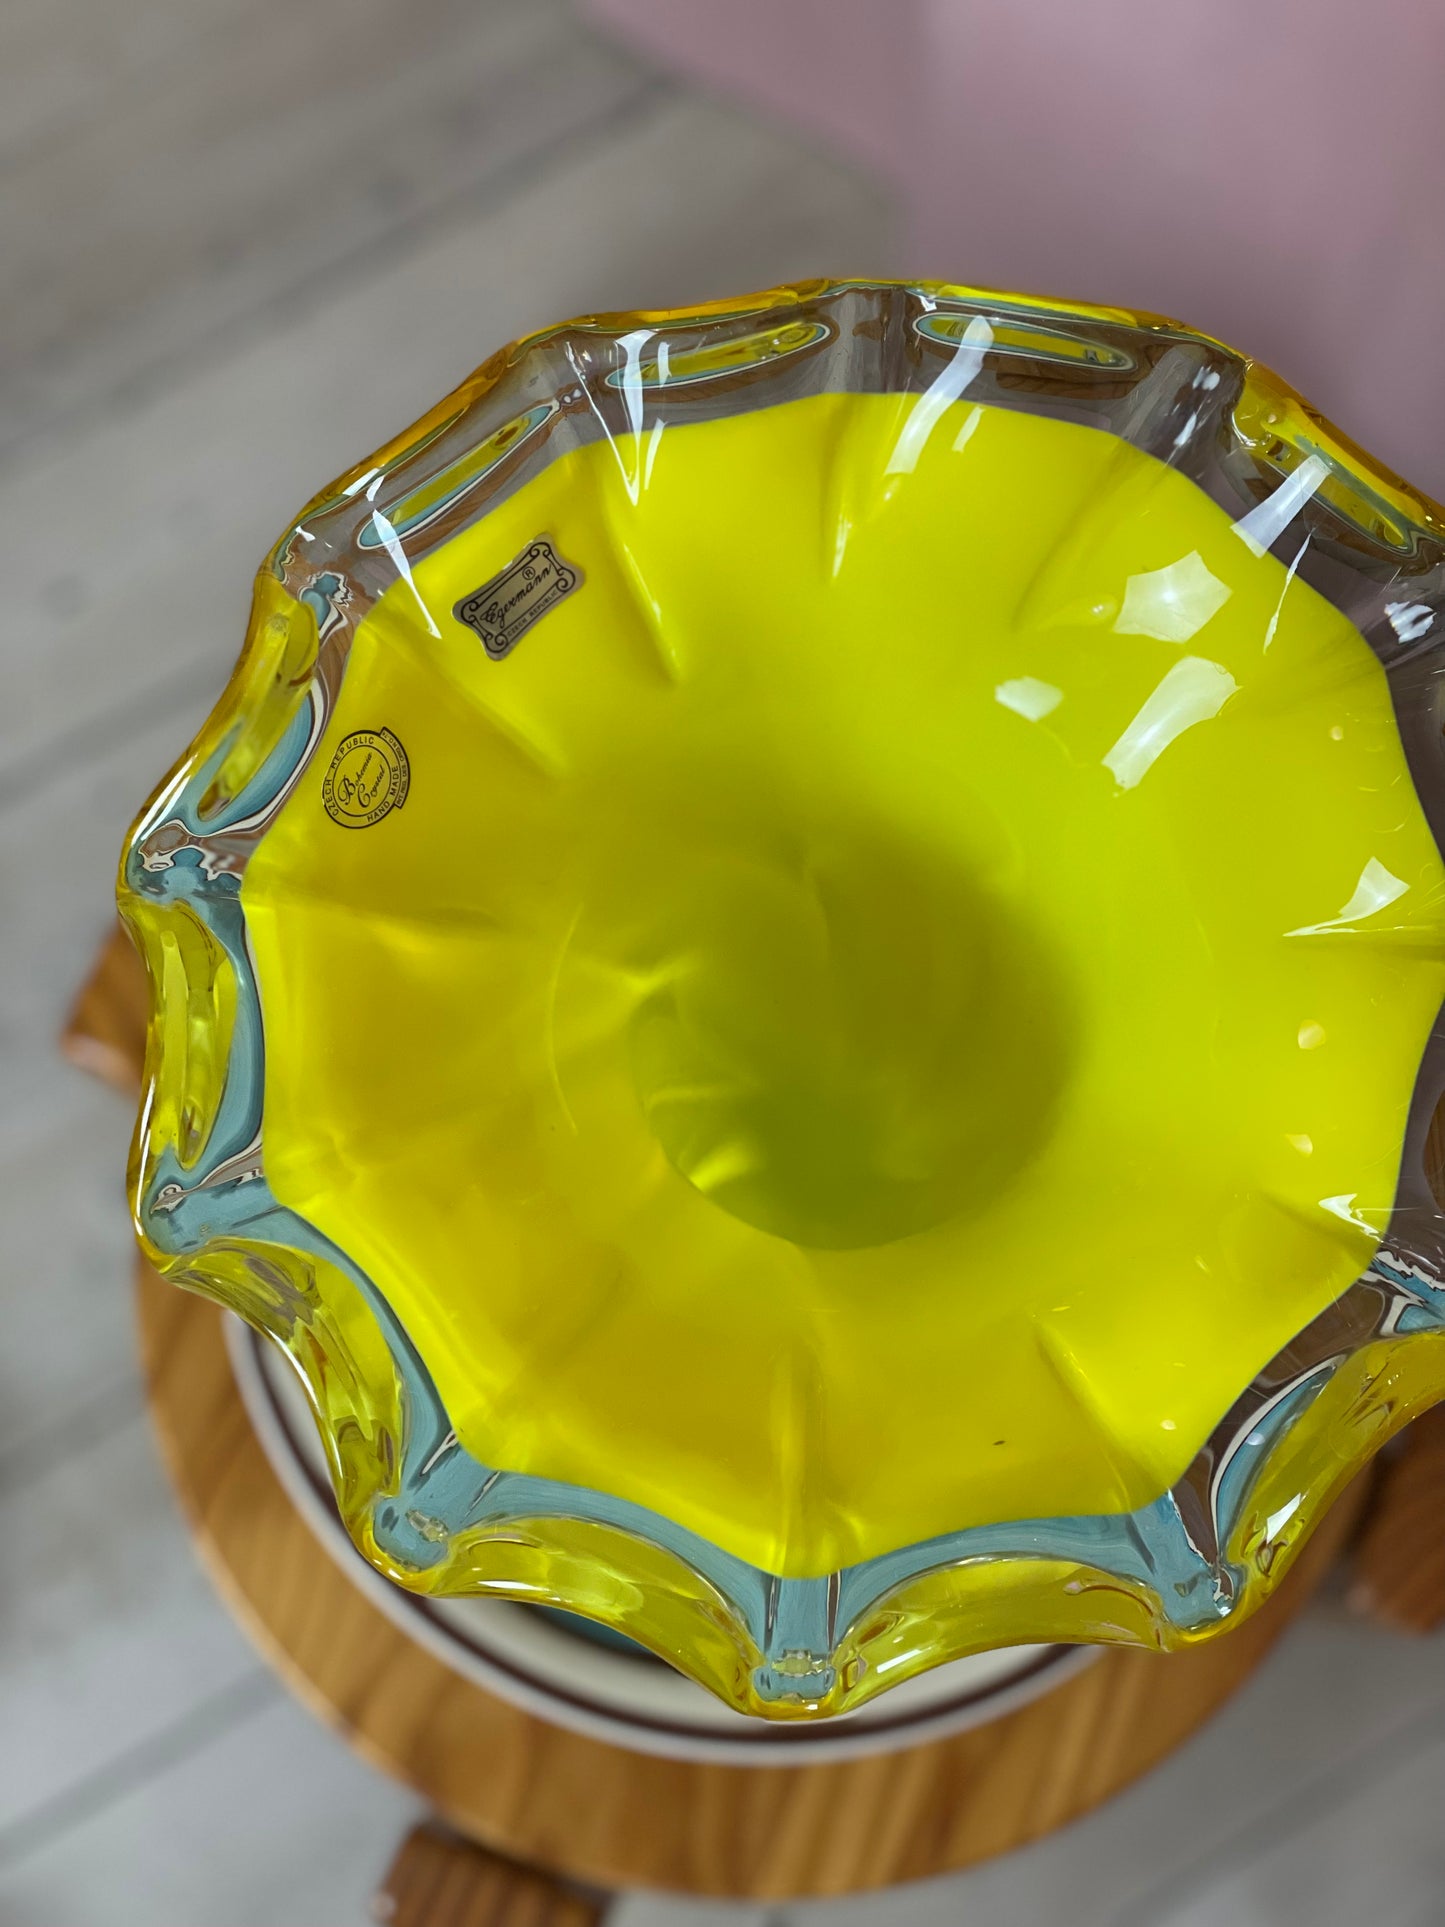 Large yellow glass vase